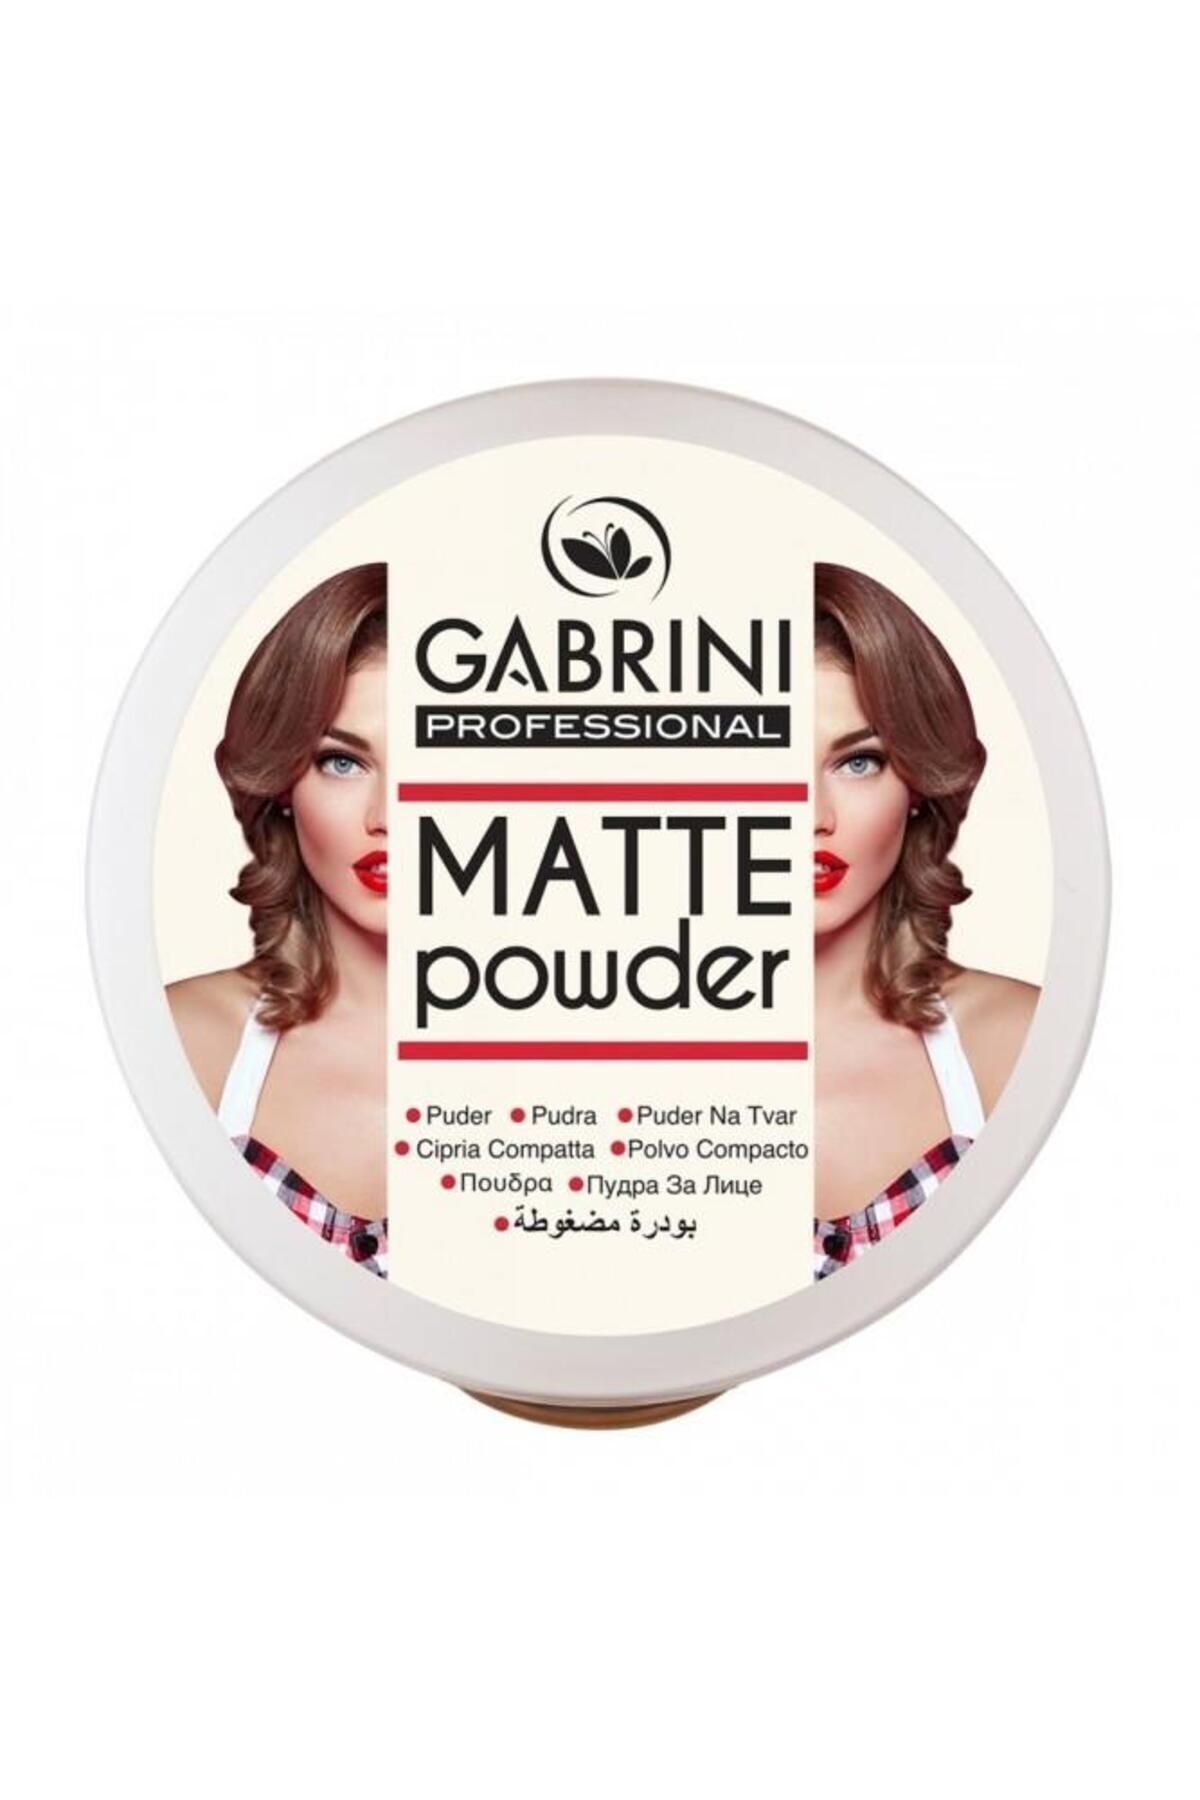 Gabrini Professional Matte Powder 01